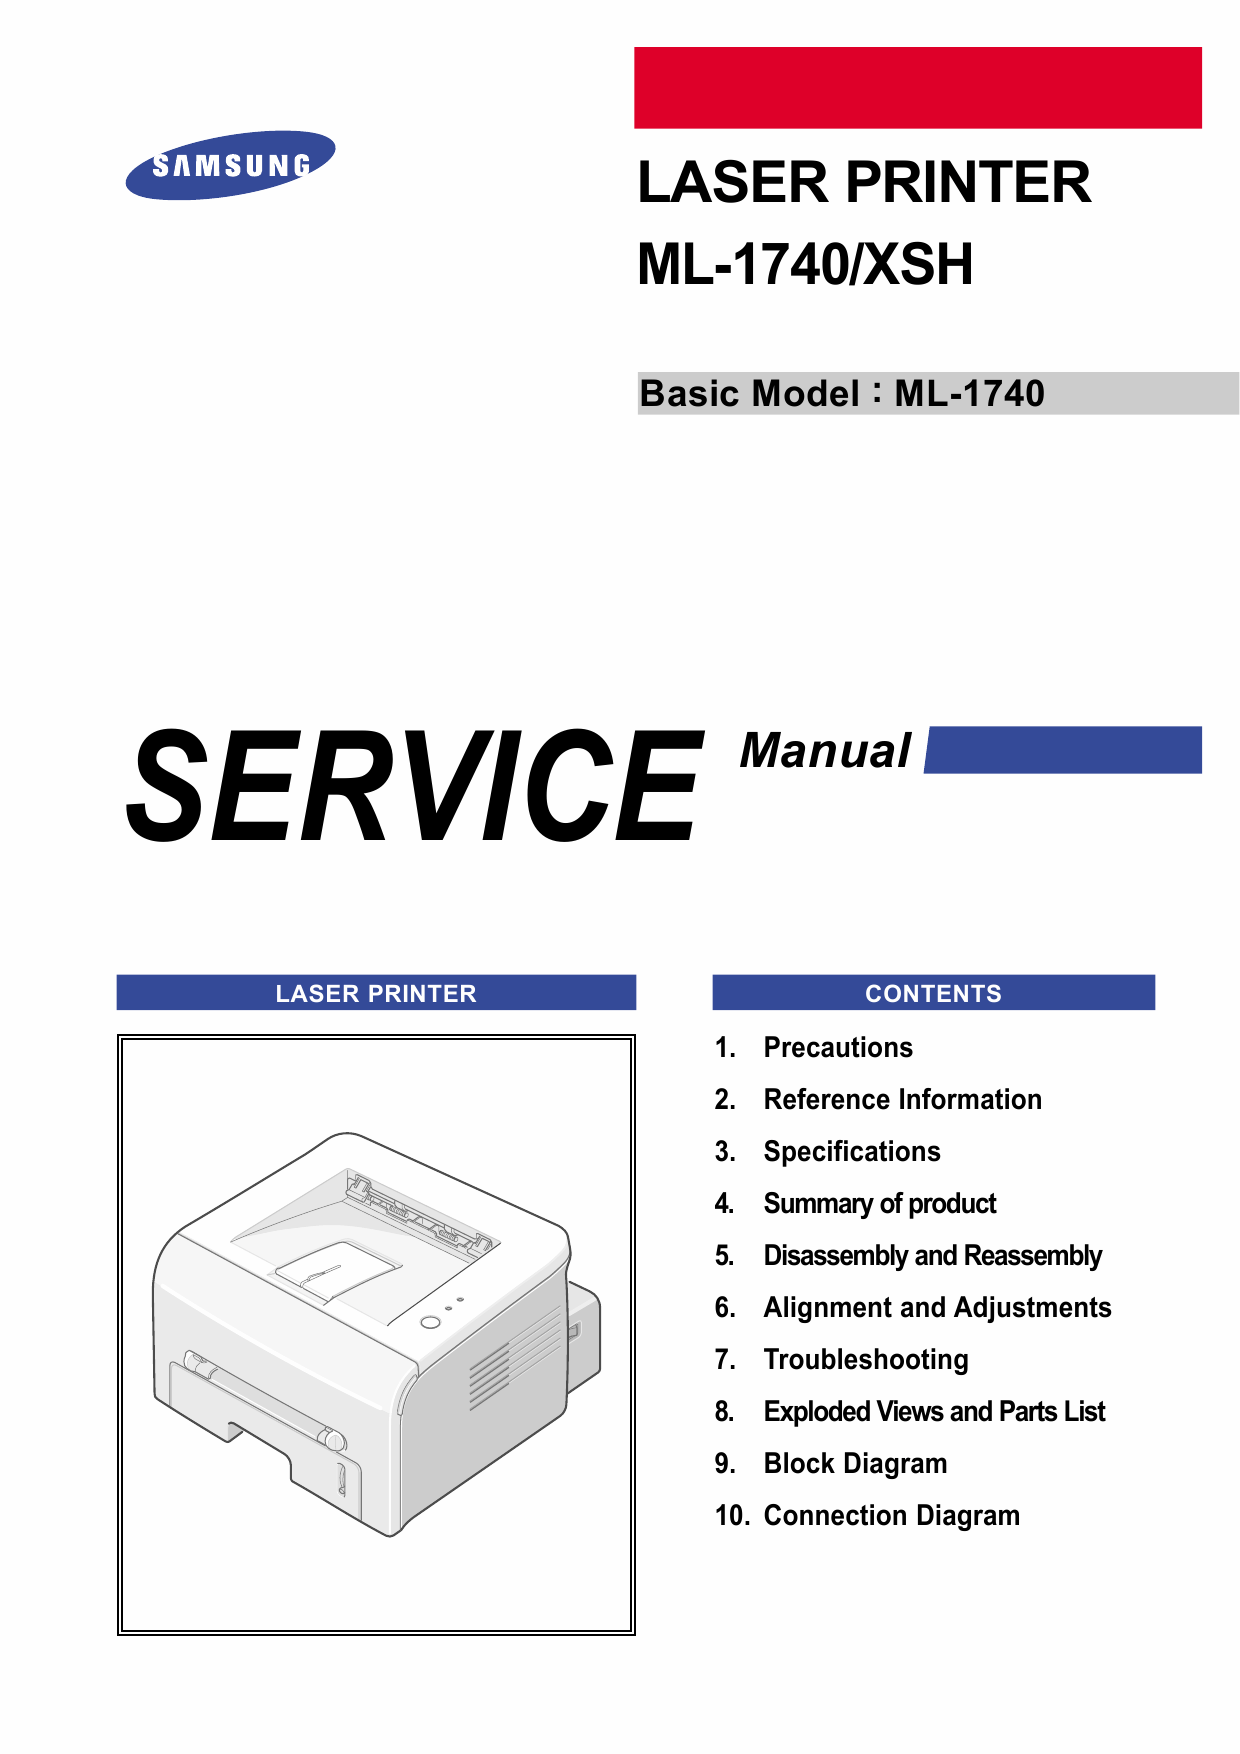 Samsung Laser-Printer ML-1740 Parts and Service Manual-1